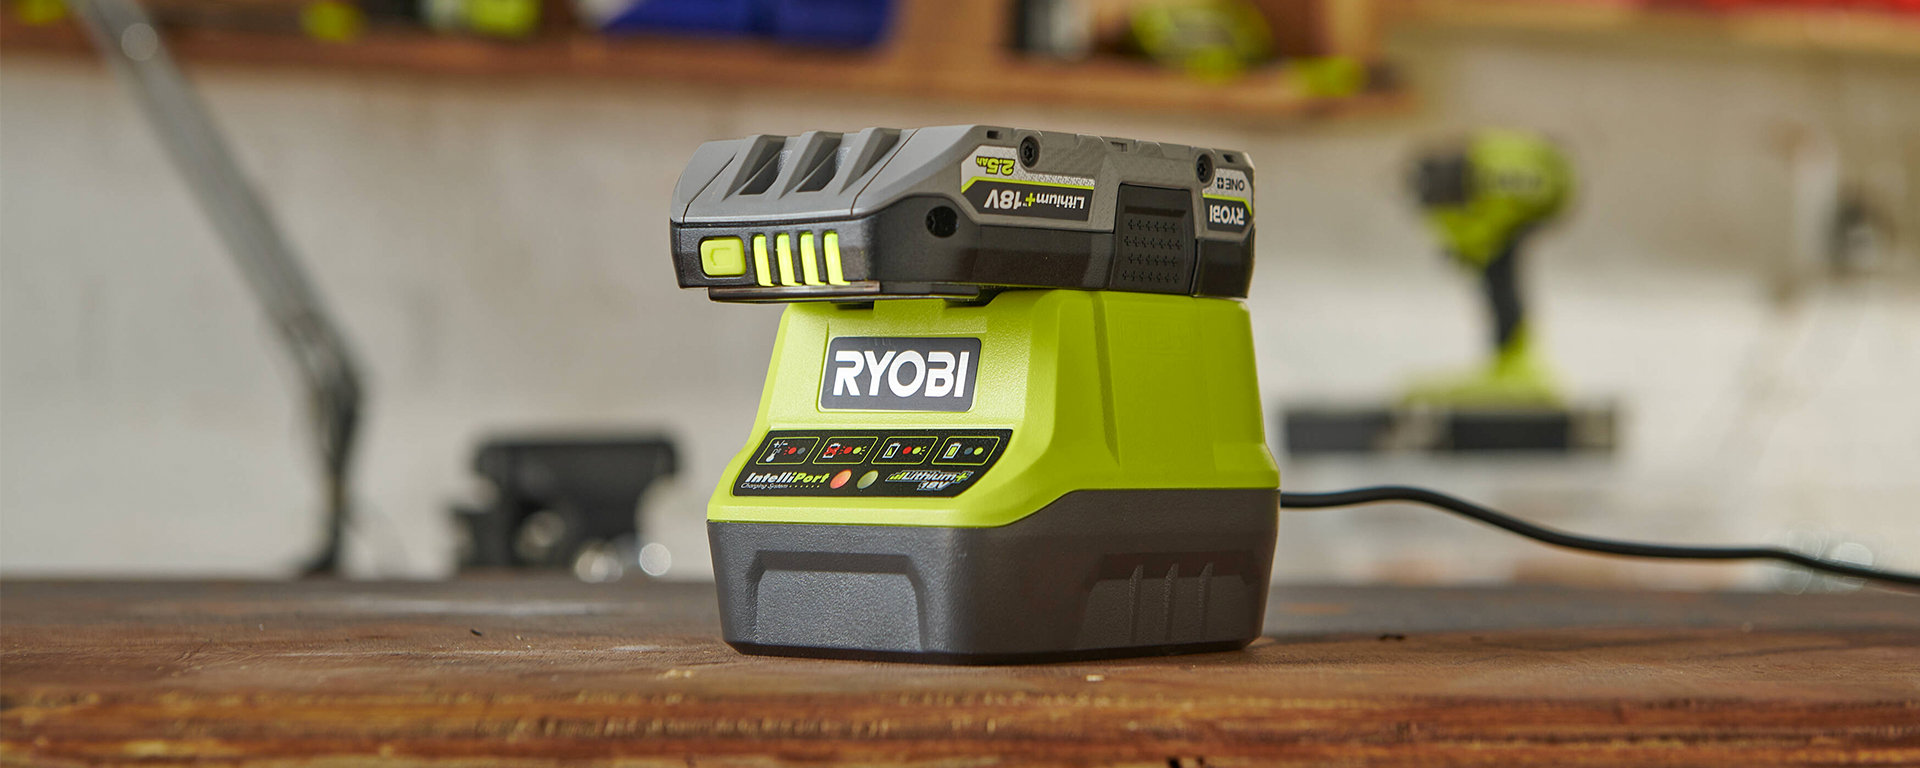 Ryobi Tools UK